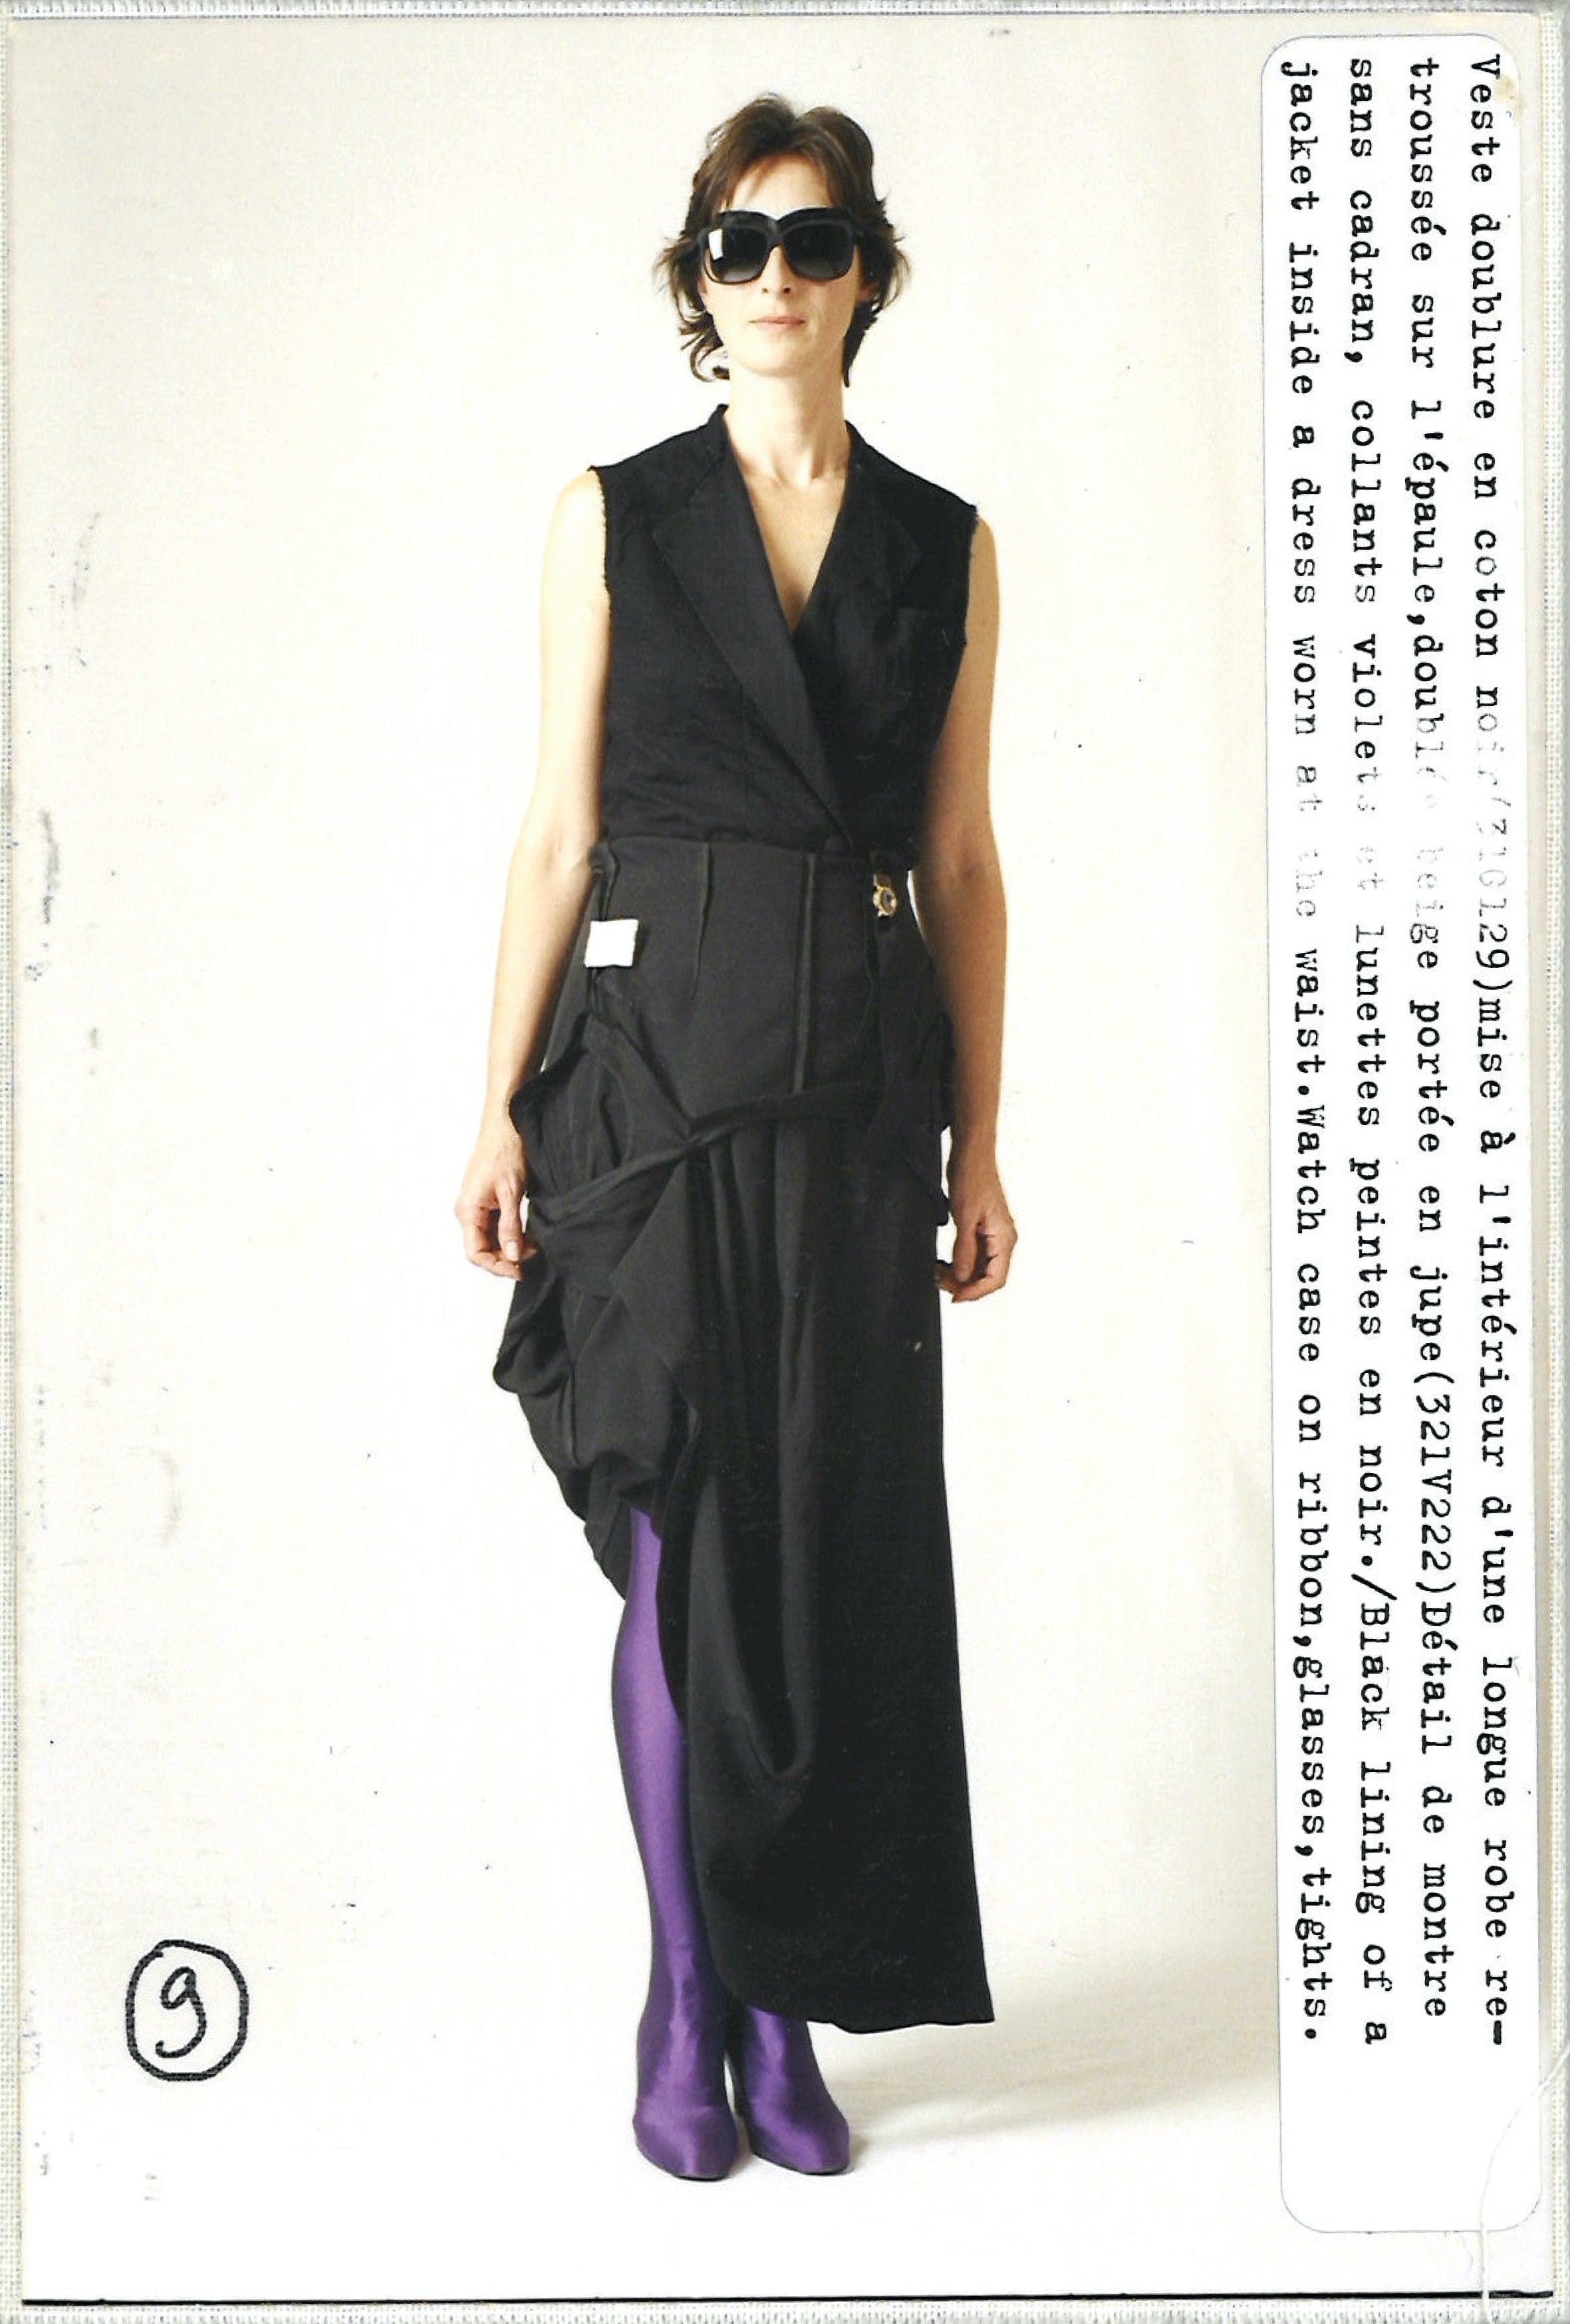 Maison Martin Margiela Lookbook
Womenswear Collection Spring/Summer 2003